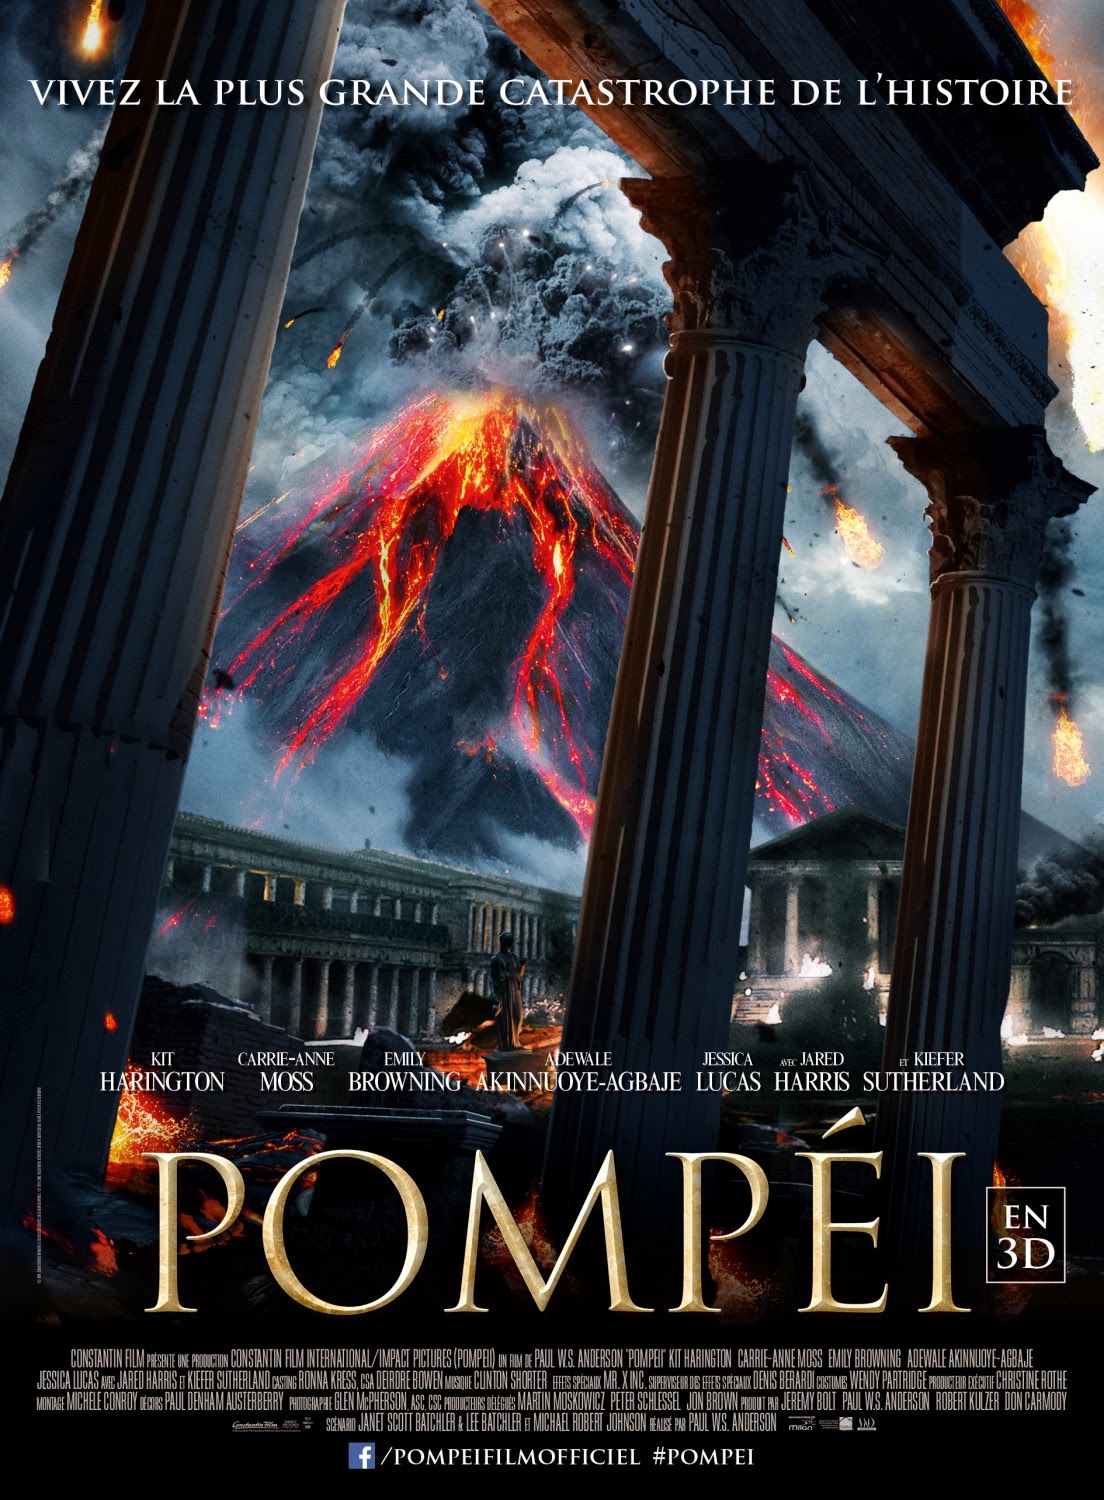 Pompeii hd free full movie download